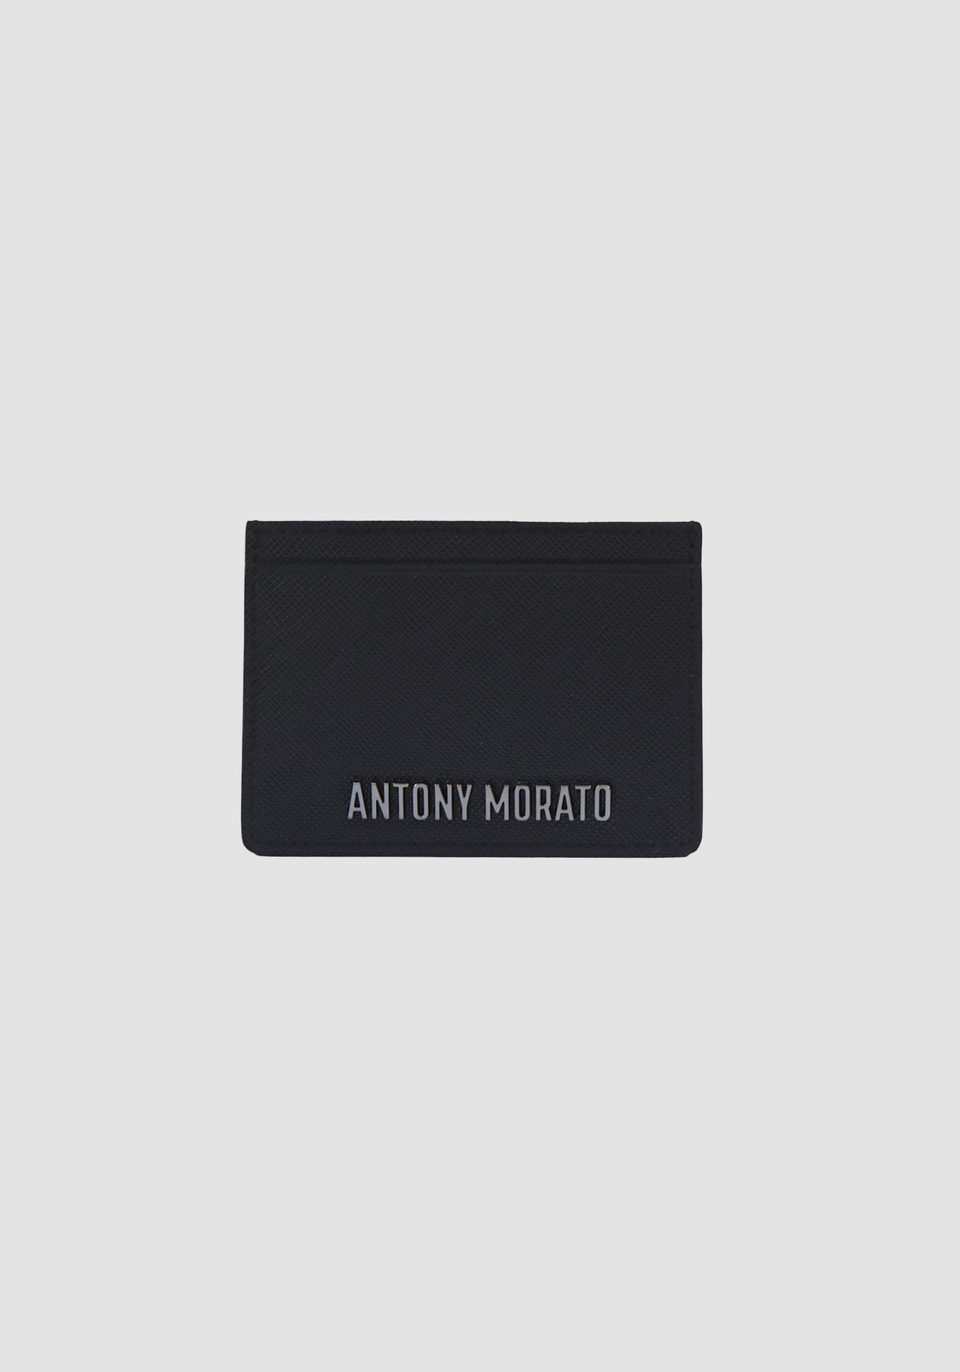 KARTENHALTER MIT METALLISCHEM LOGO - Antony Morato Online Shop